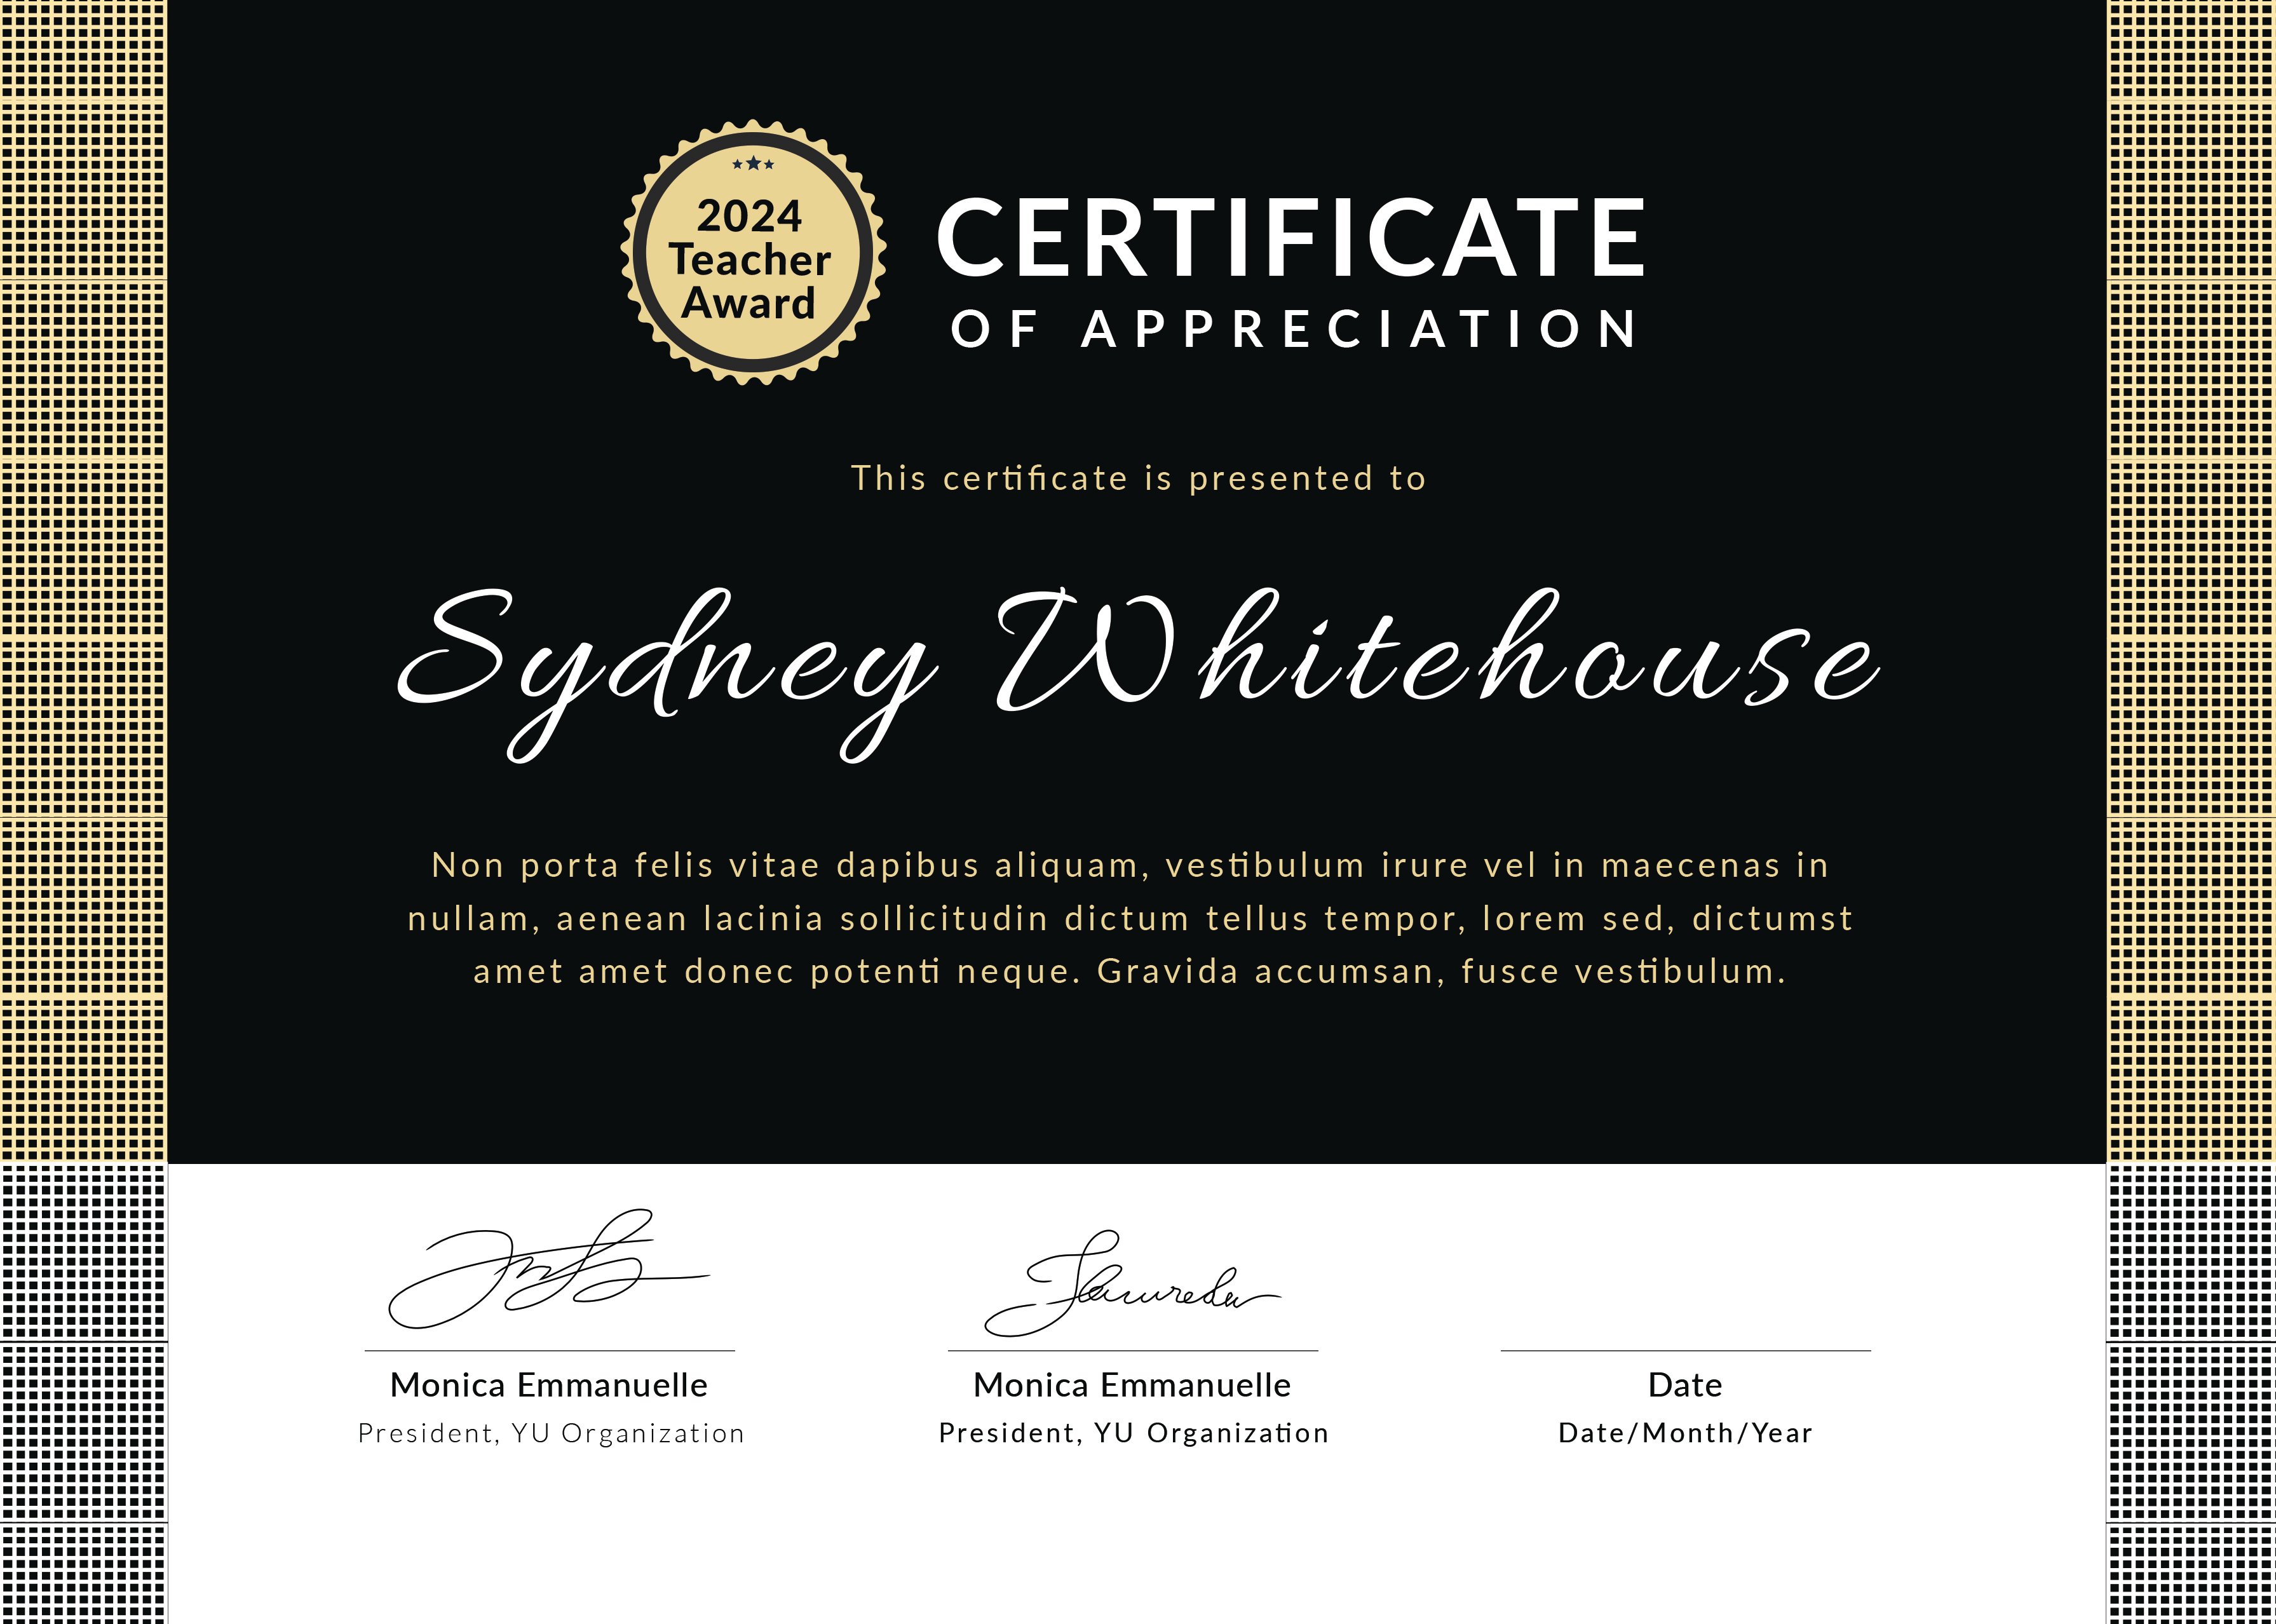 Free Teacher Appreciation Certificate Template In Adobe Photoshop Illustrator Microsoft Word 